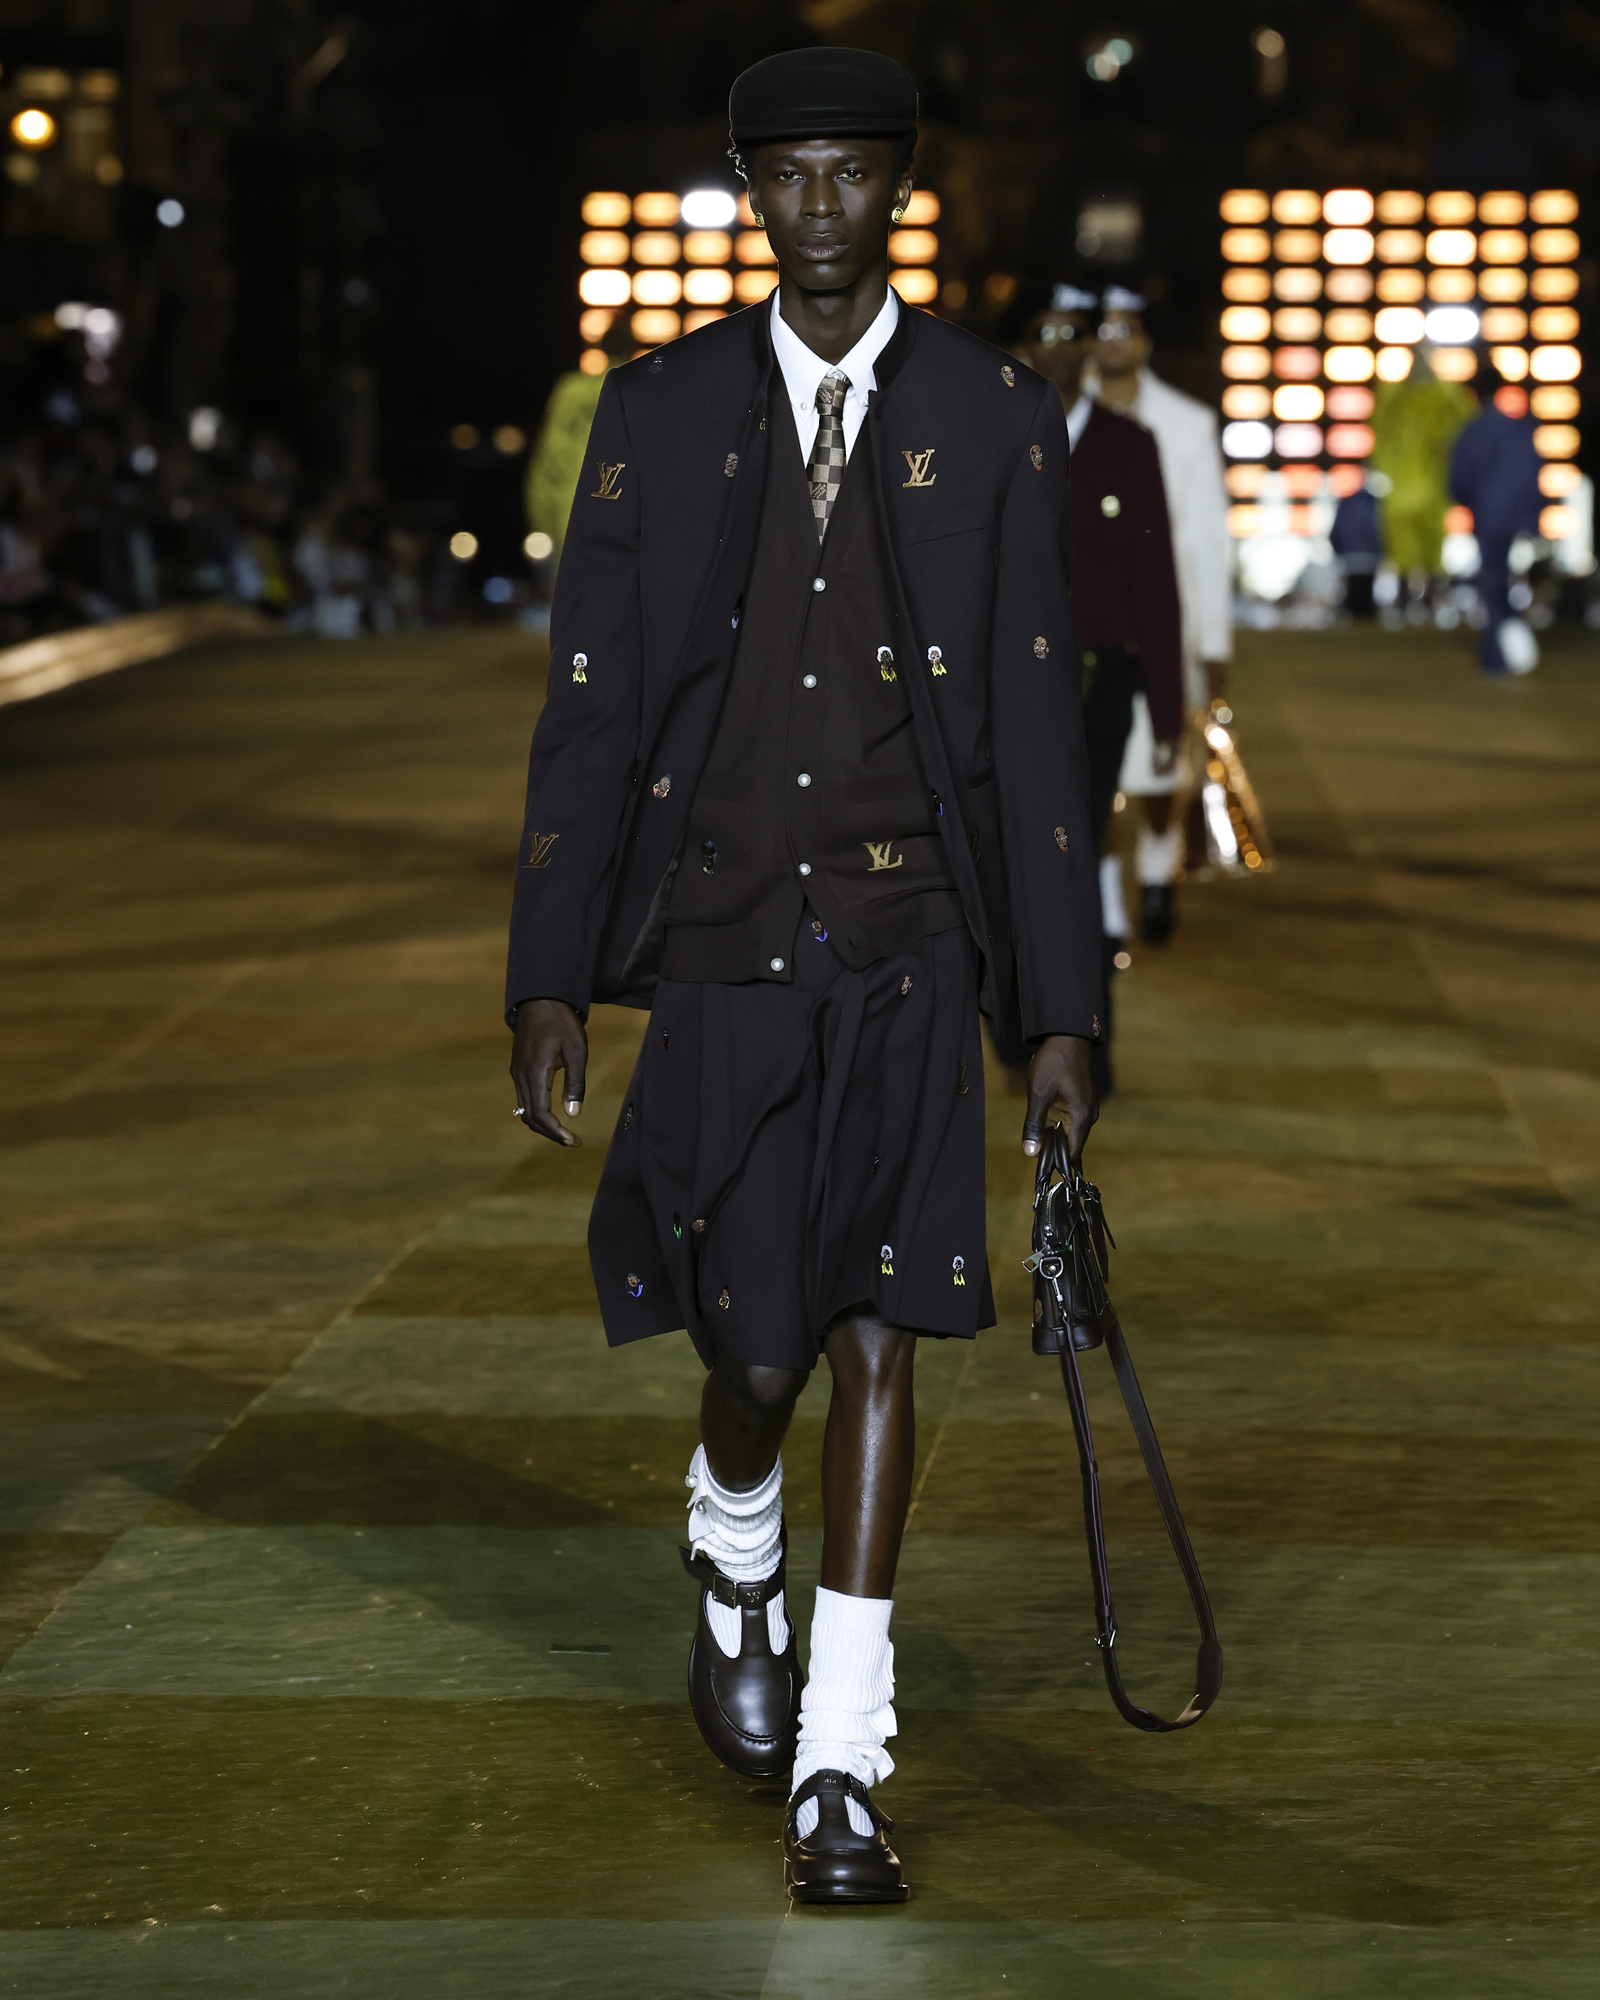 Louis Vuitton introduces a new denim collection for men